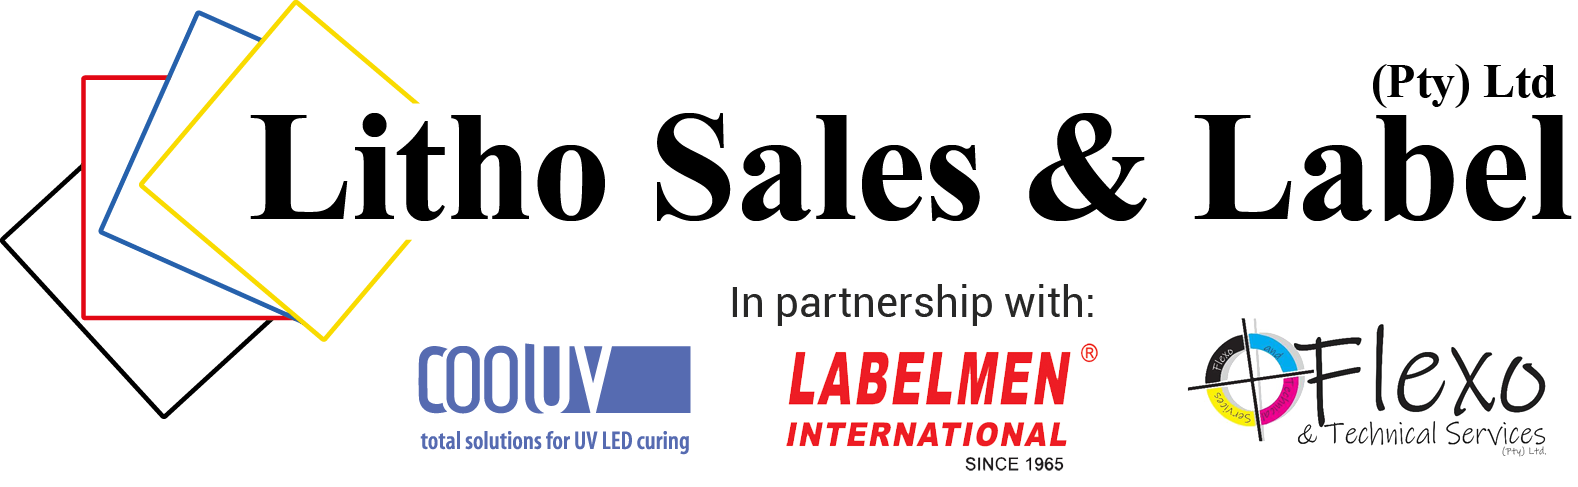 Litho Sales & Label